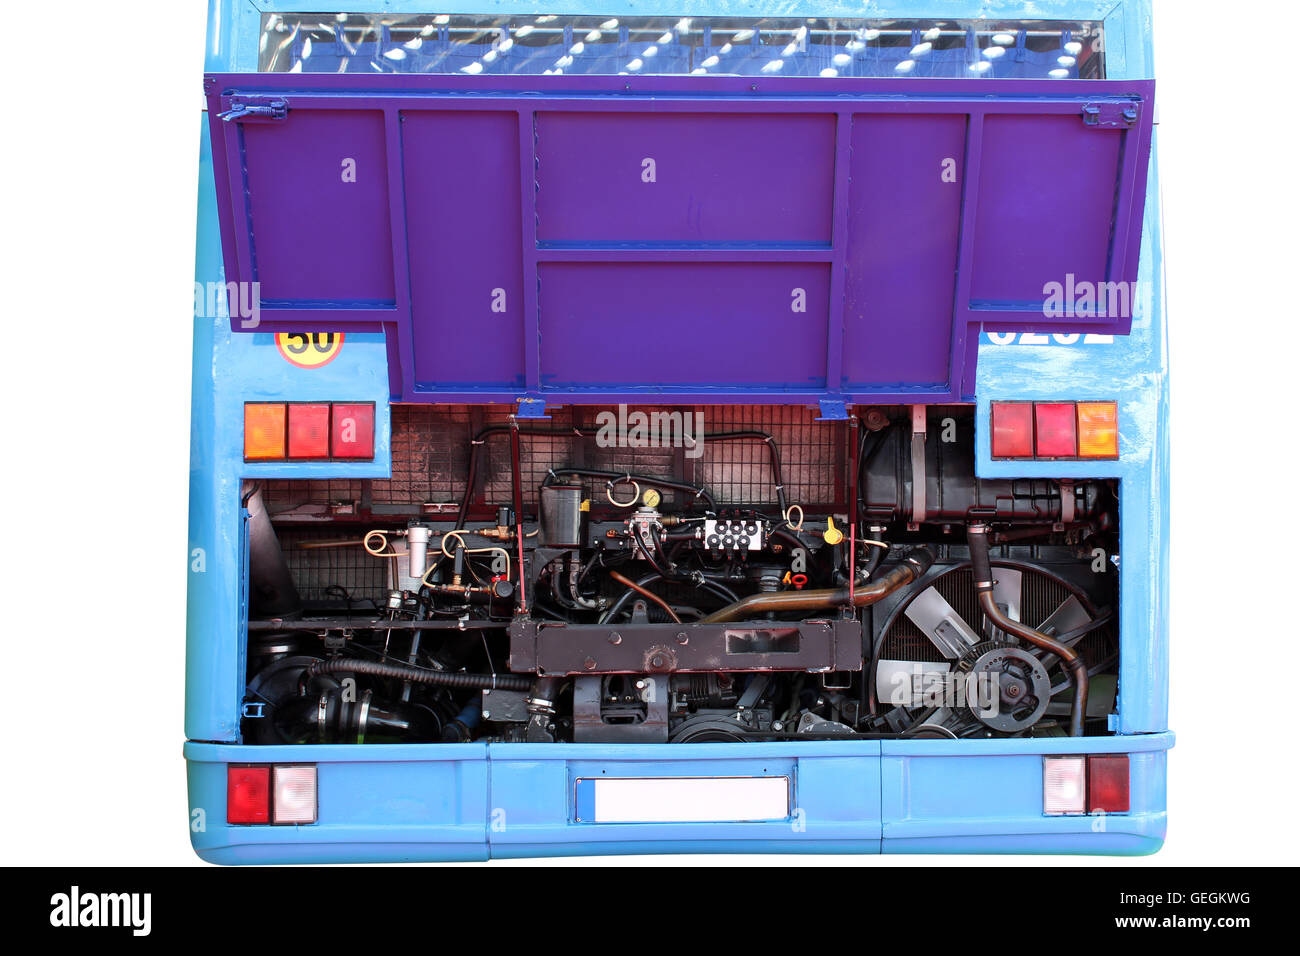 bus engine Stock Photo